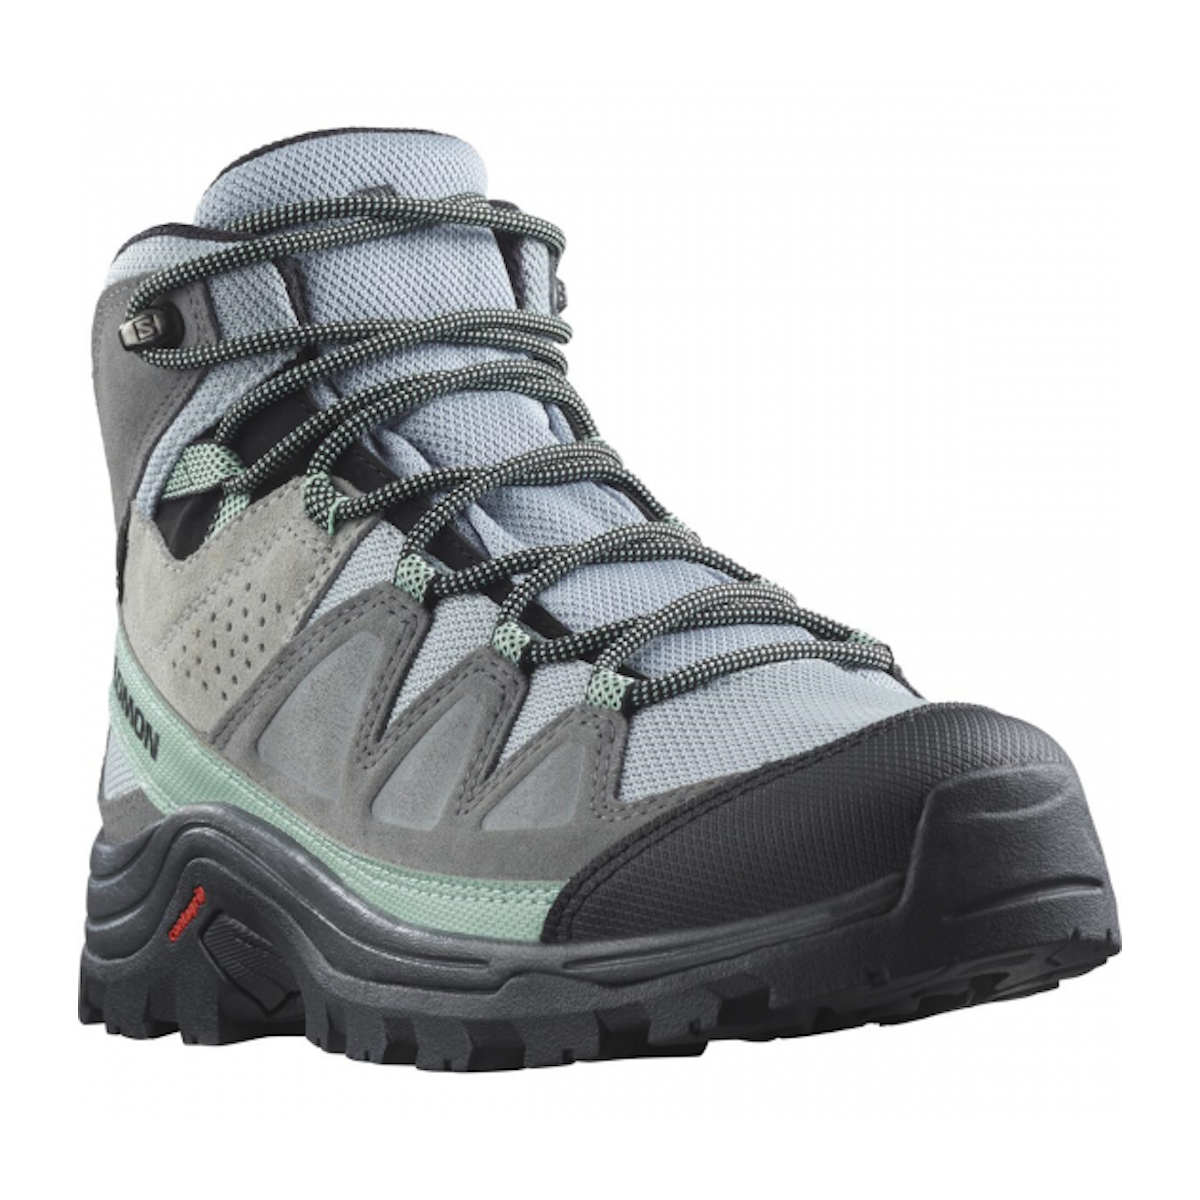 SALOMON QUEST ROVE GTX W hiking footwear - grey/light blue/black